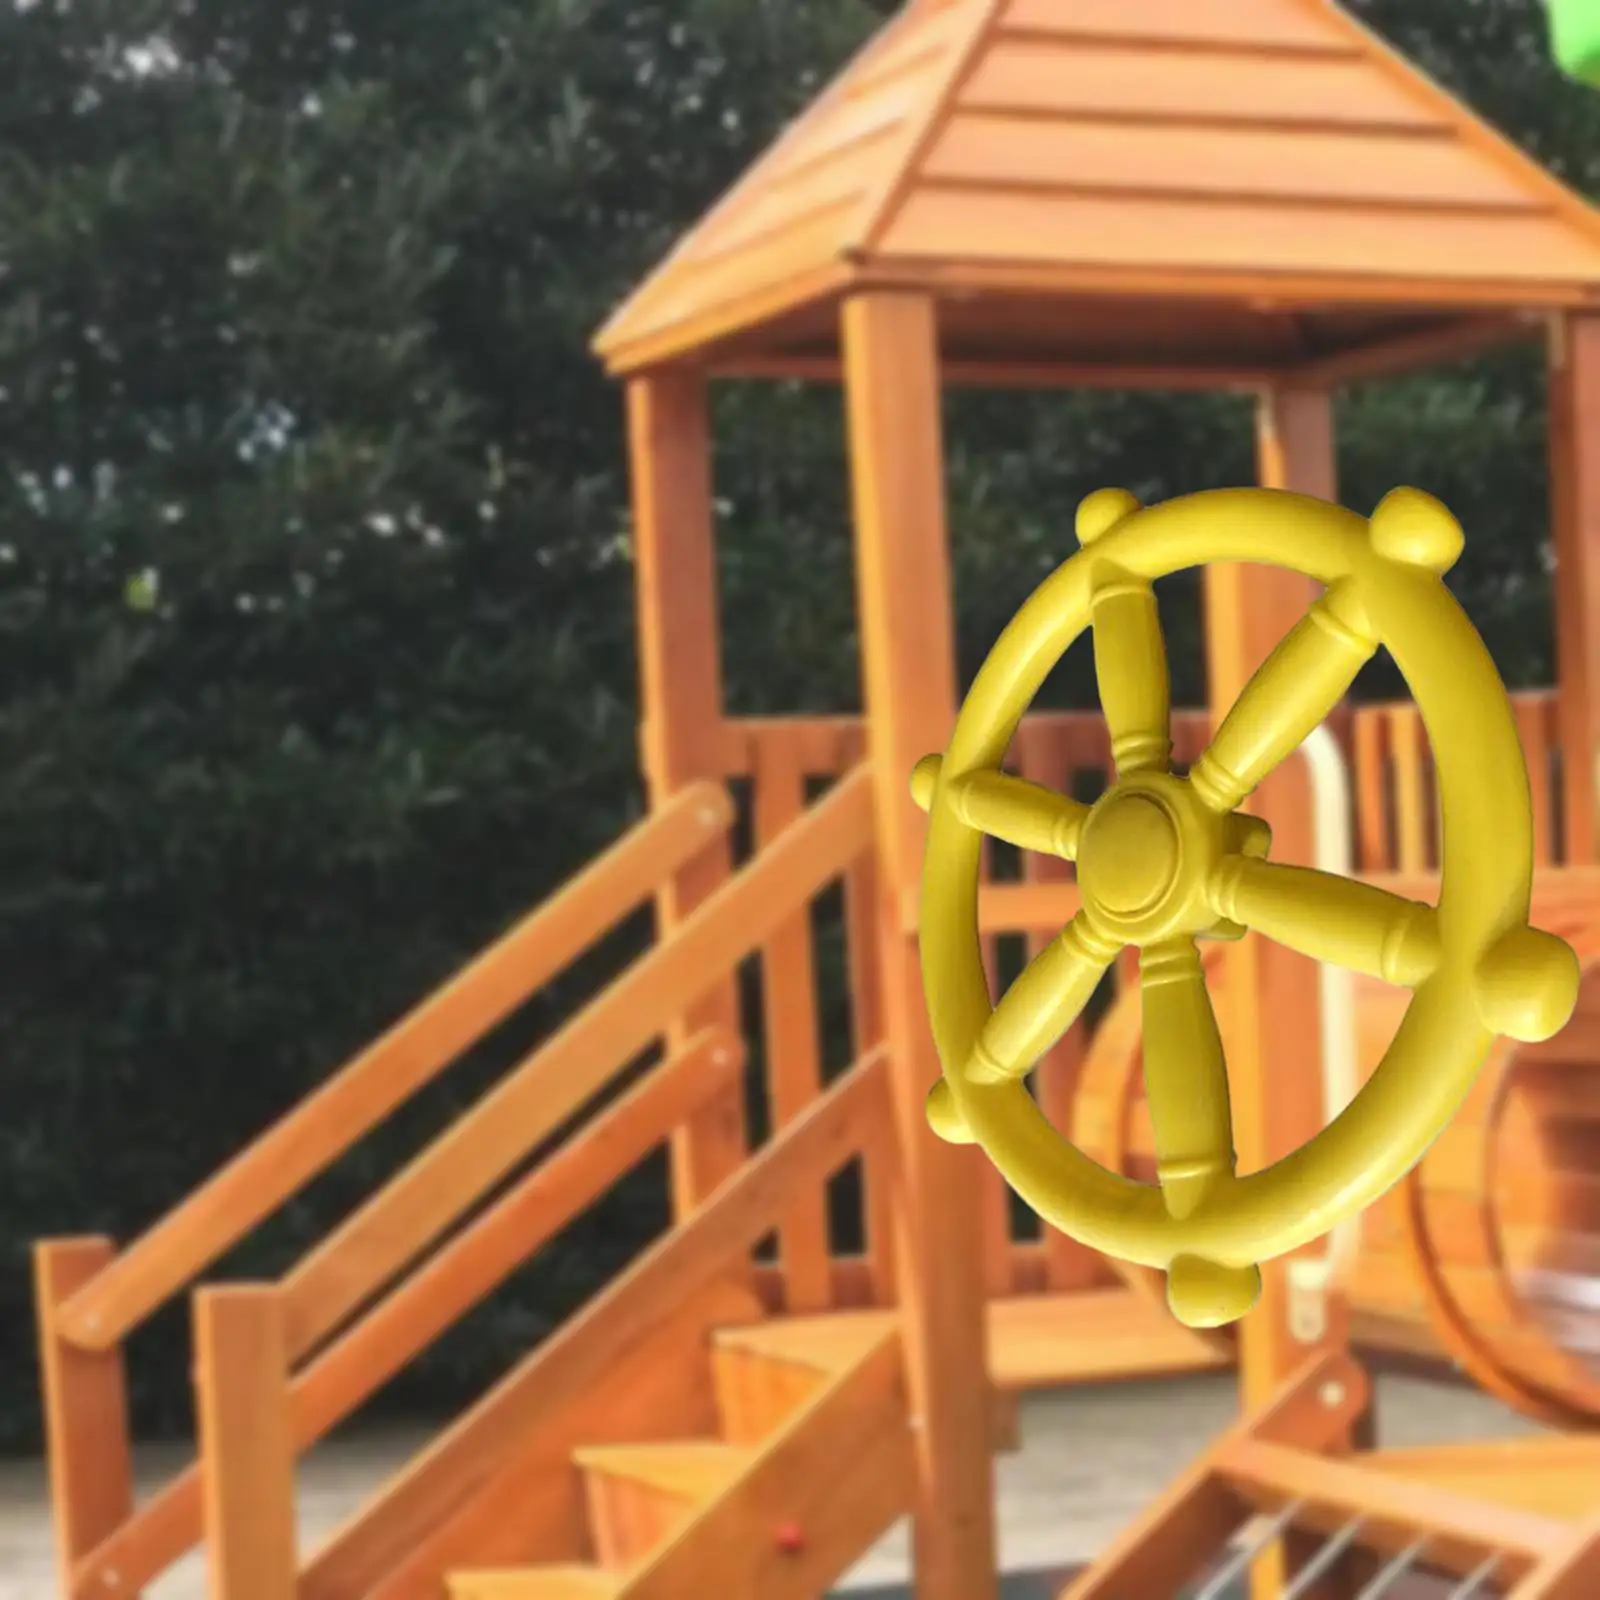 Pirate Ship Wheel with Screws Playground Equipment Kids Steering Wheel Toy Amusement Park Outdoor Treehouse Playhouse Garden